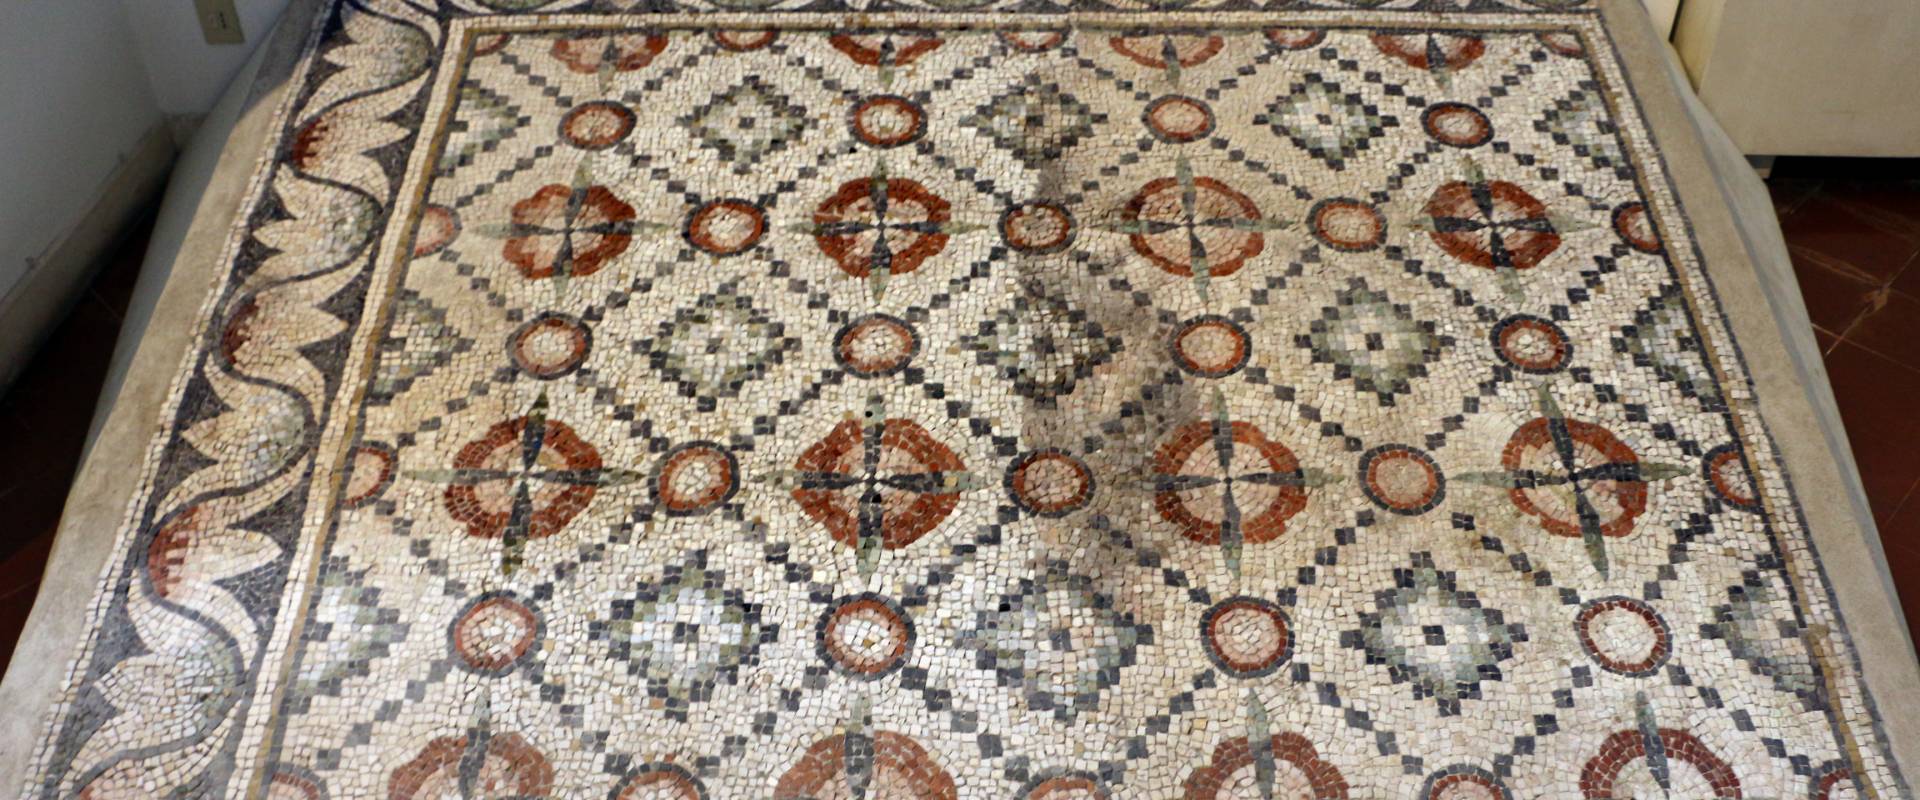 Mosaico pavimentale da s. michele in africisco, 500-550 dc ca photo by Sailko